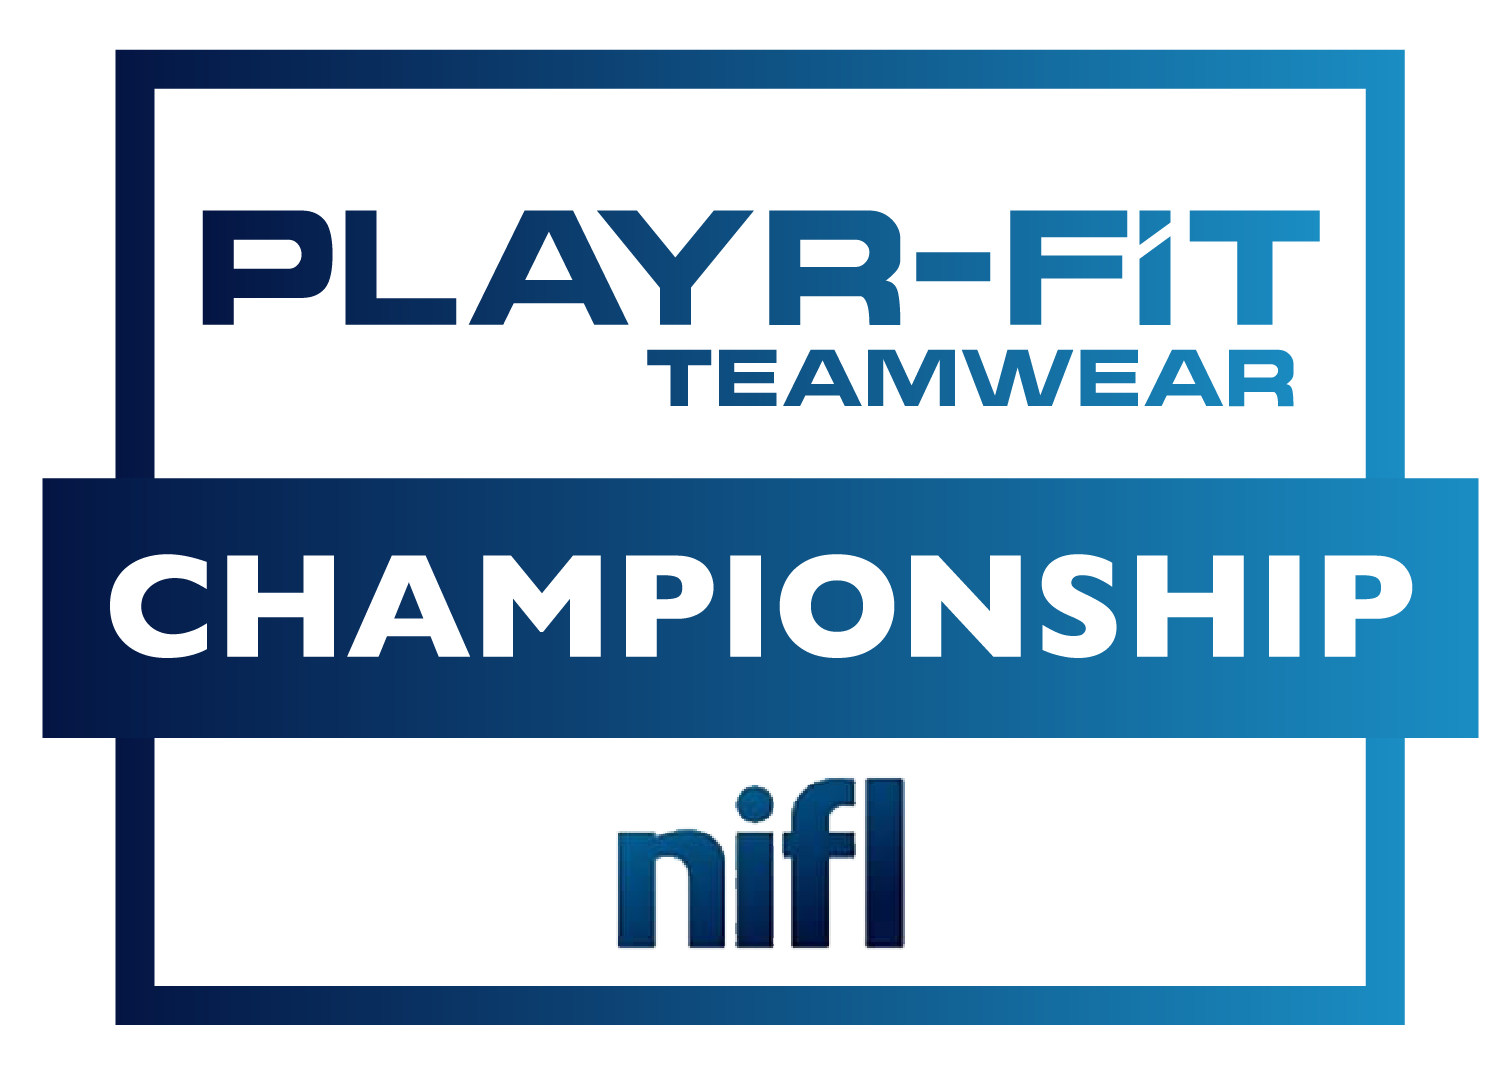 sponsorship/competition logo